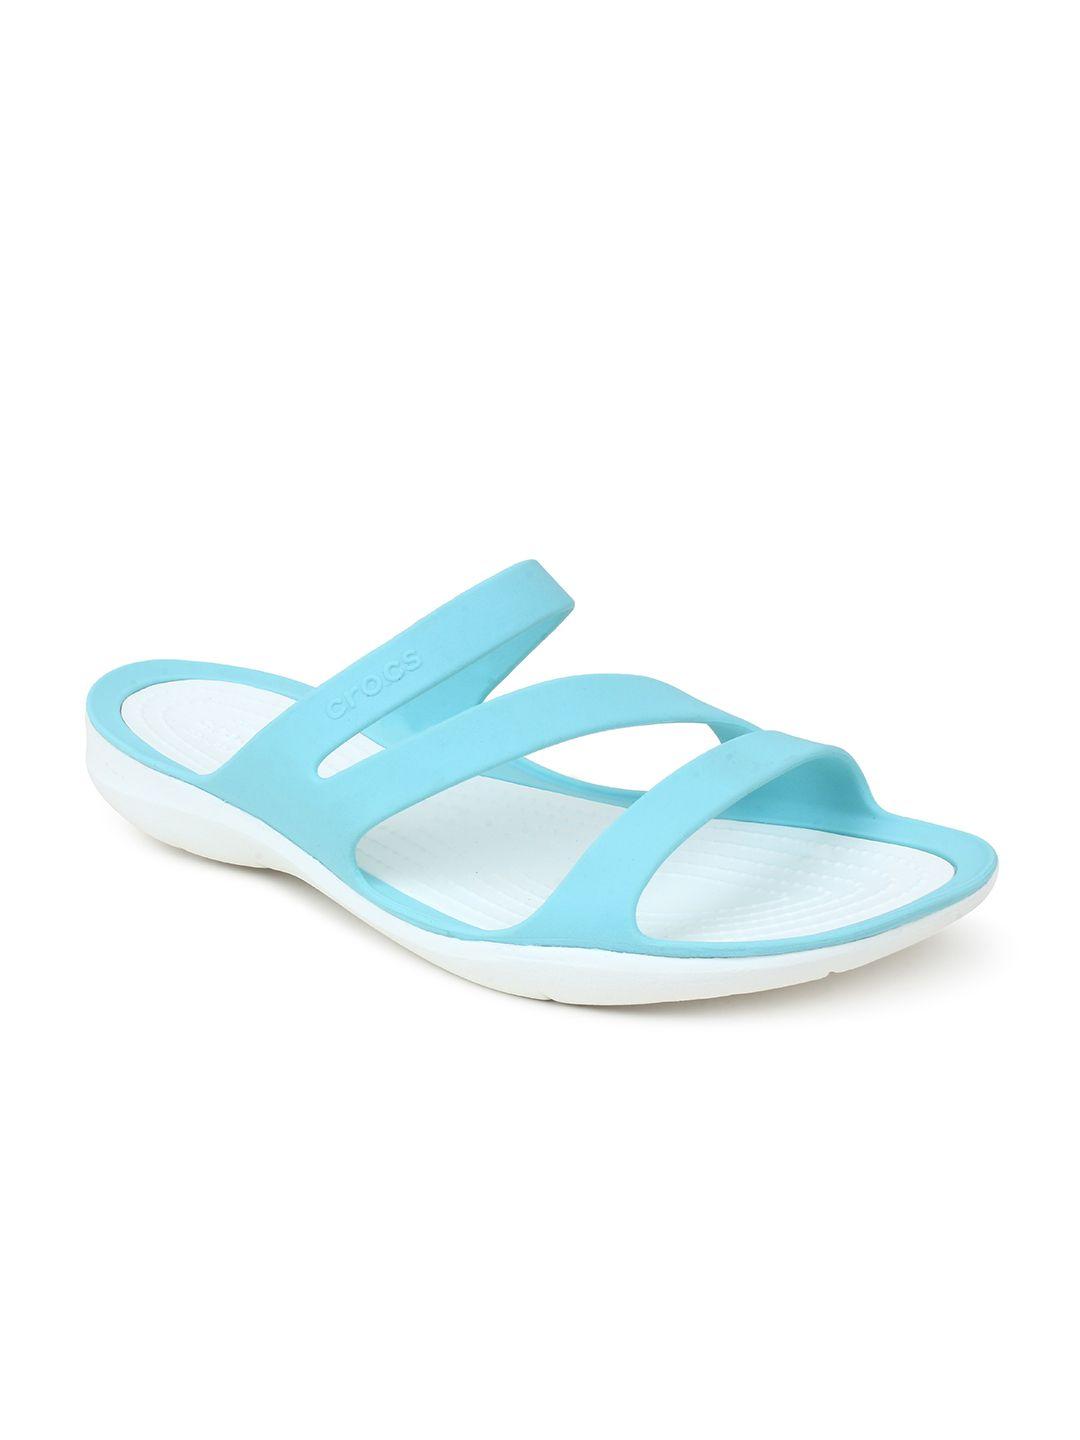 crocs women blue & white open toe flats